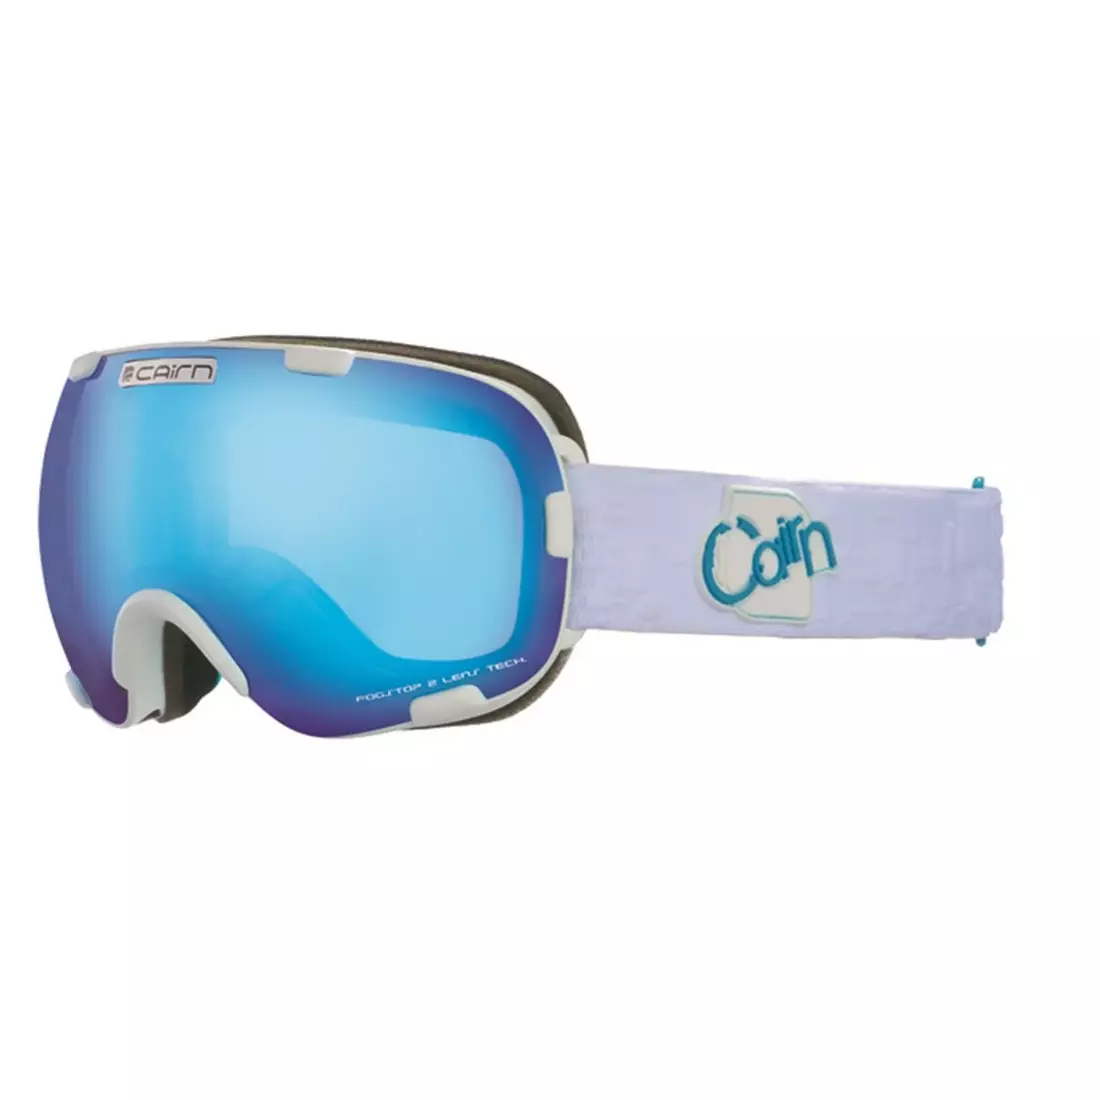 CAIRN gogle narciarskie/snowboardowe SPIRIT light blue 5806818201